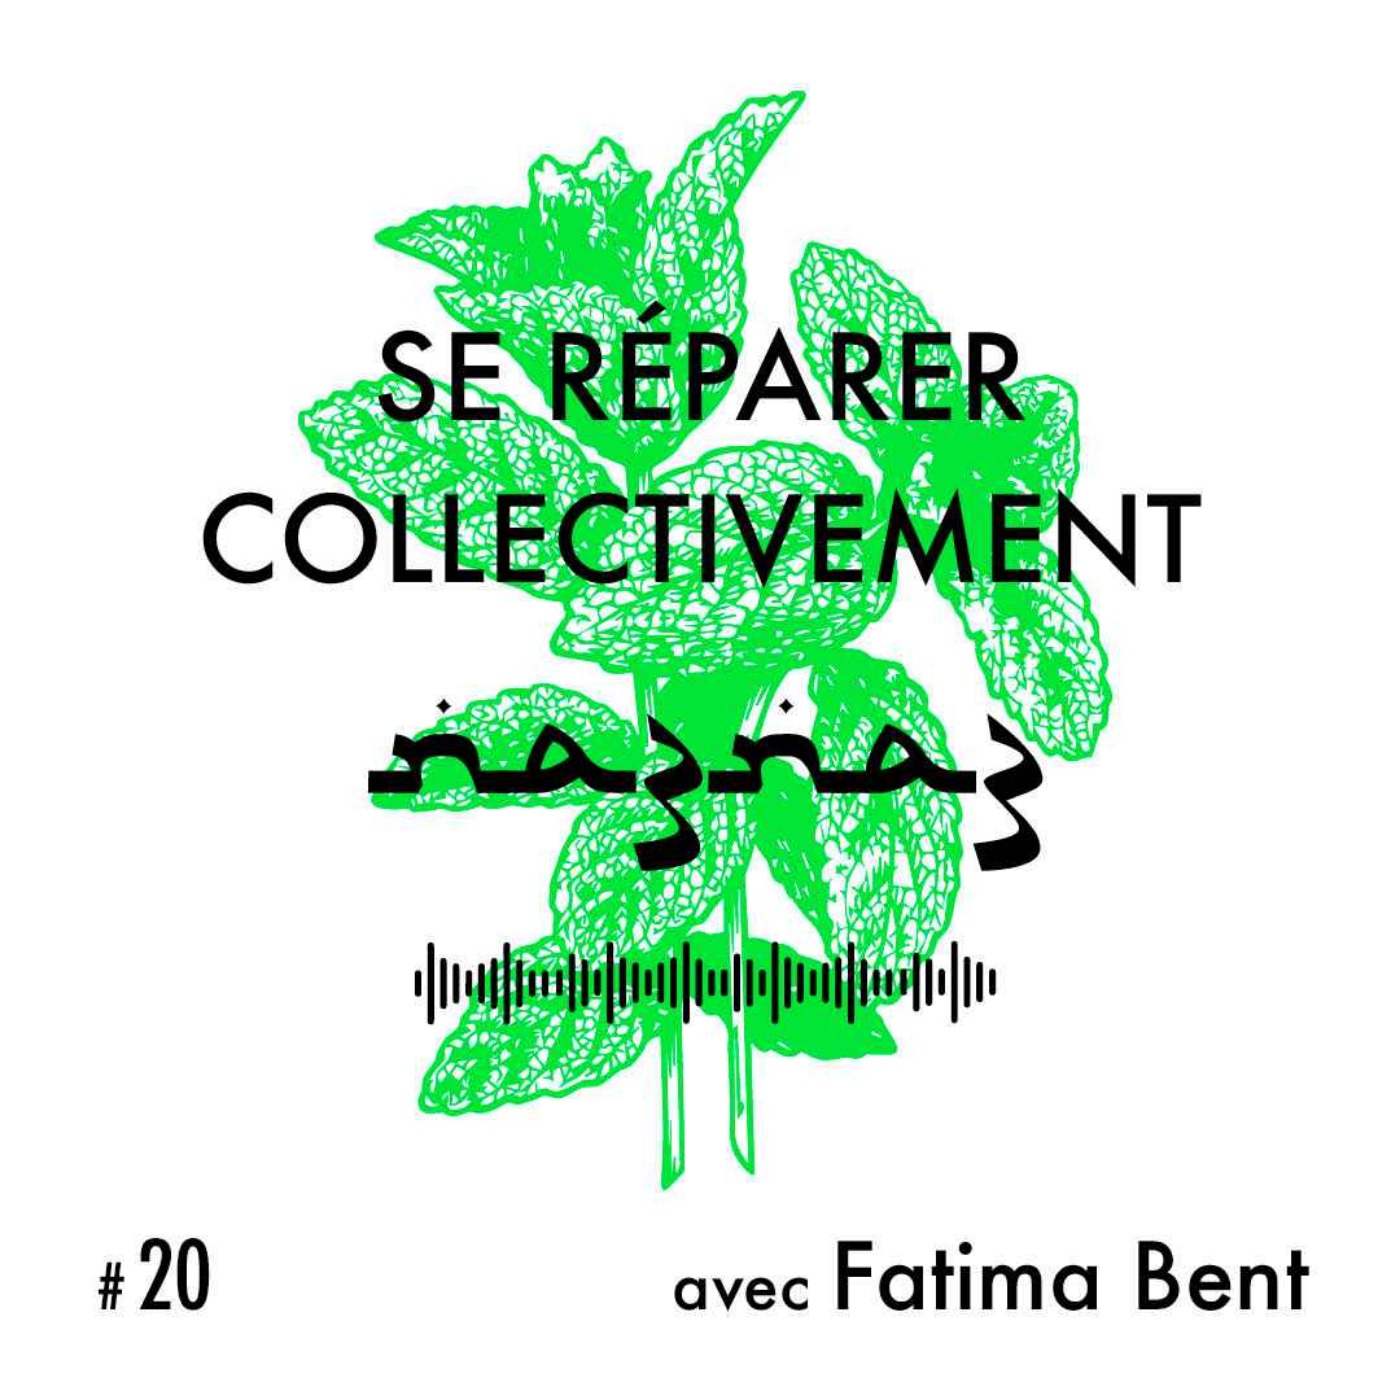 na3na3 #20 | Se réparer collectivement, avec Fatima Bent